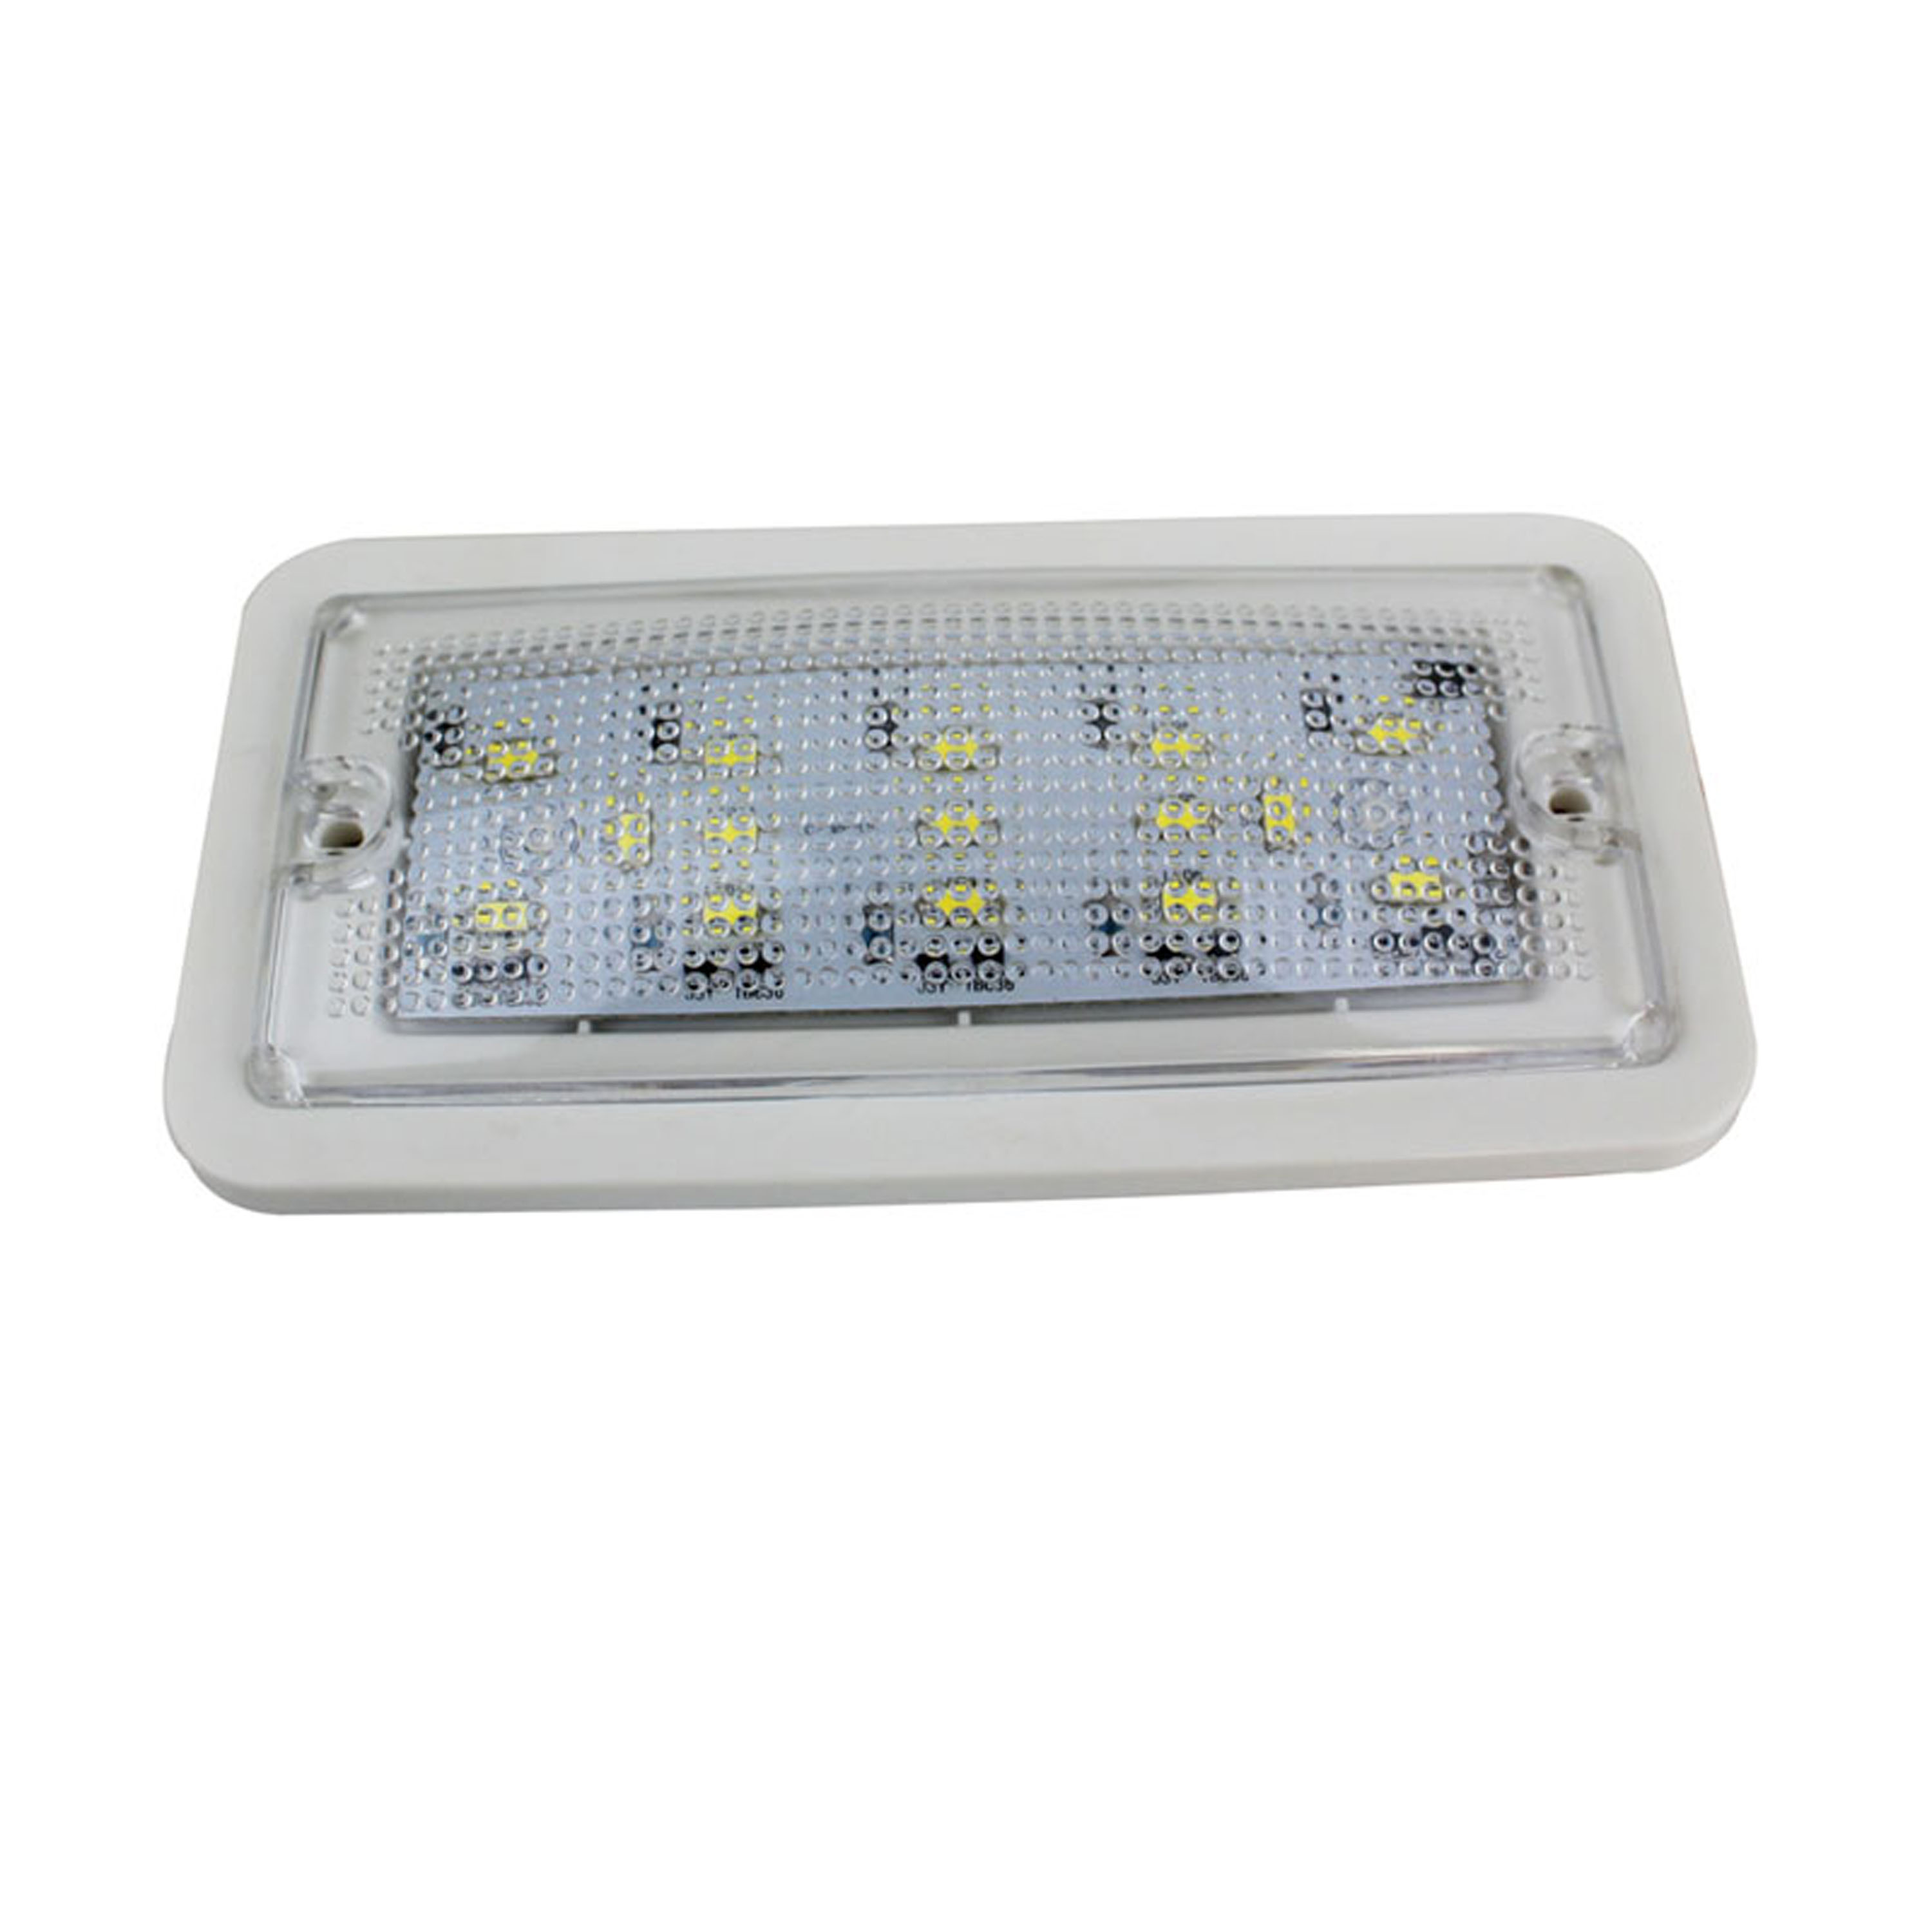 LED-002 LED interior car light